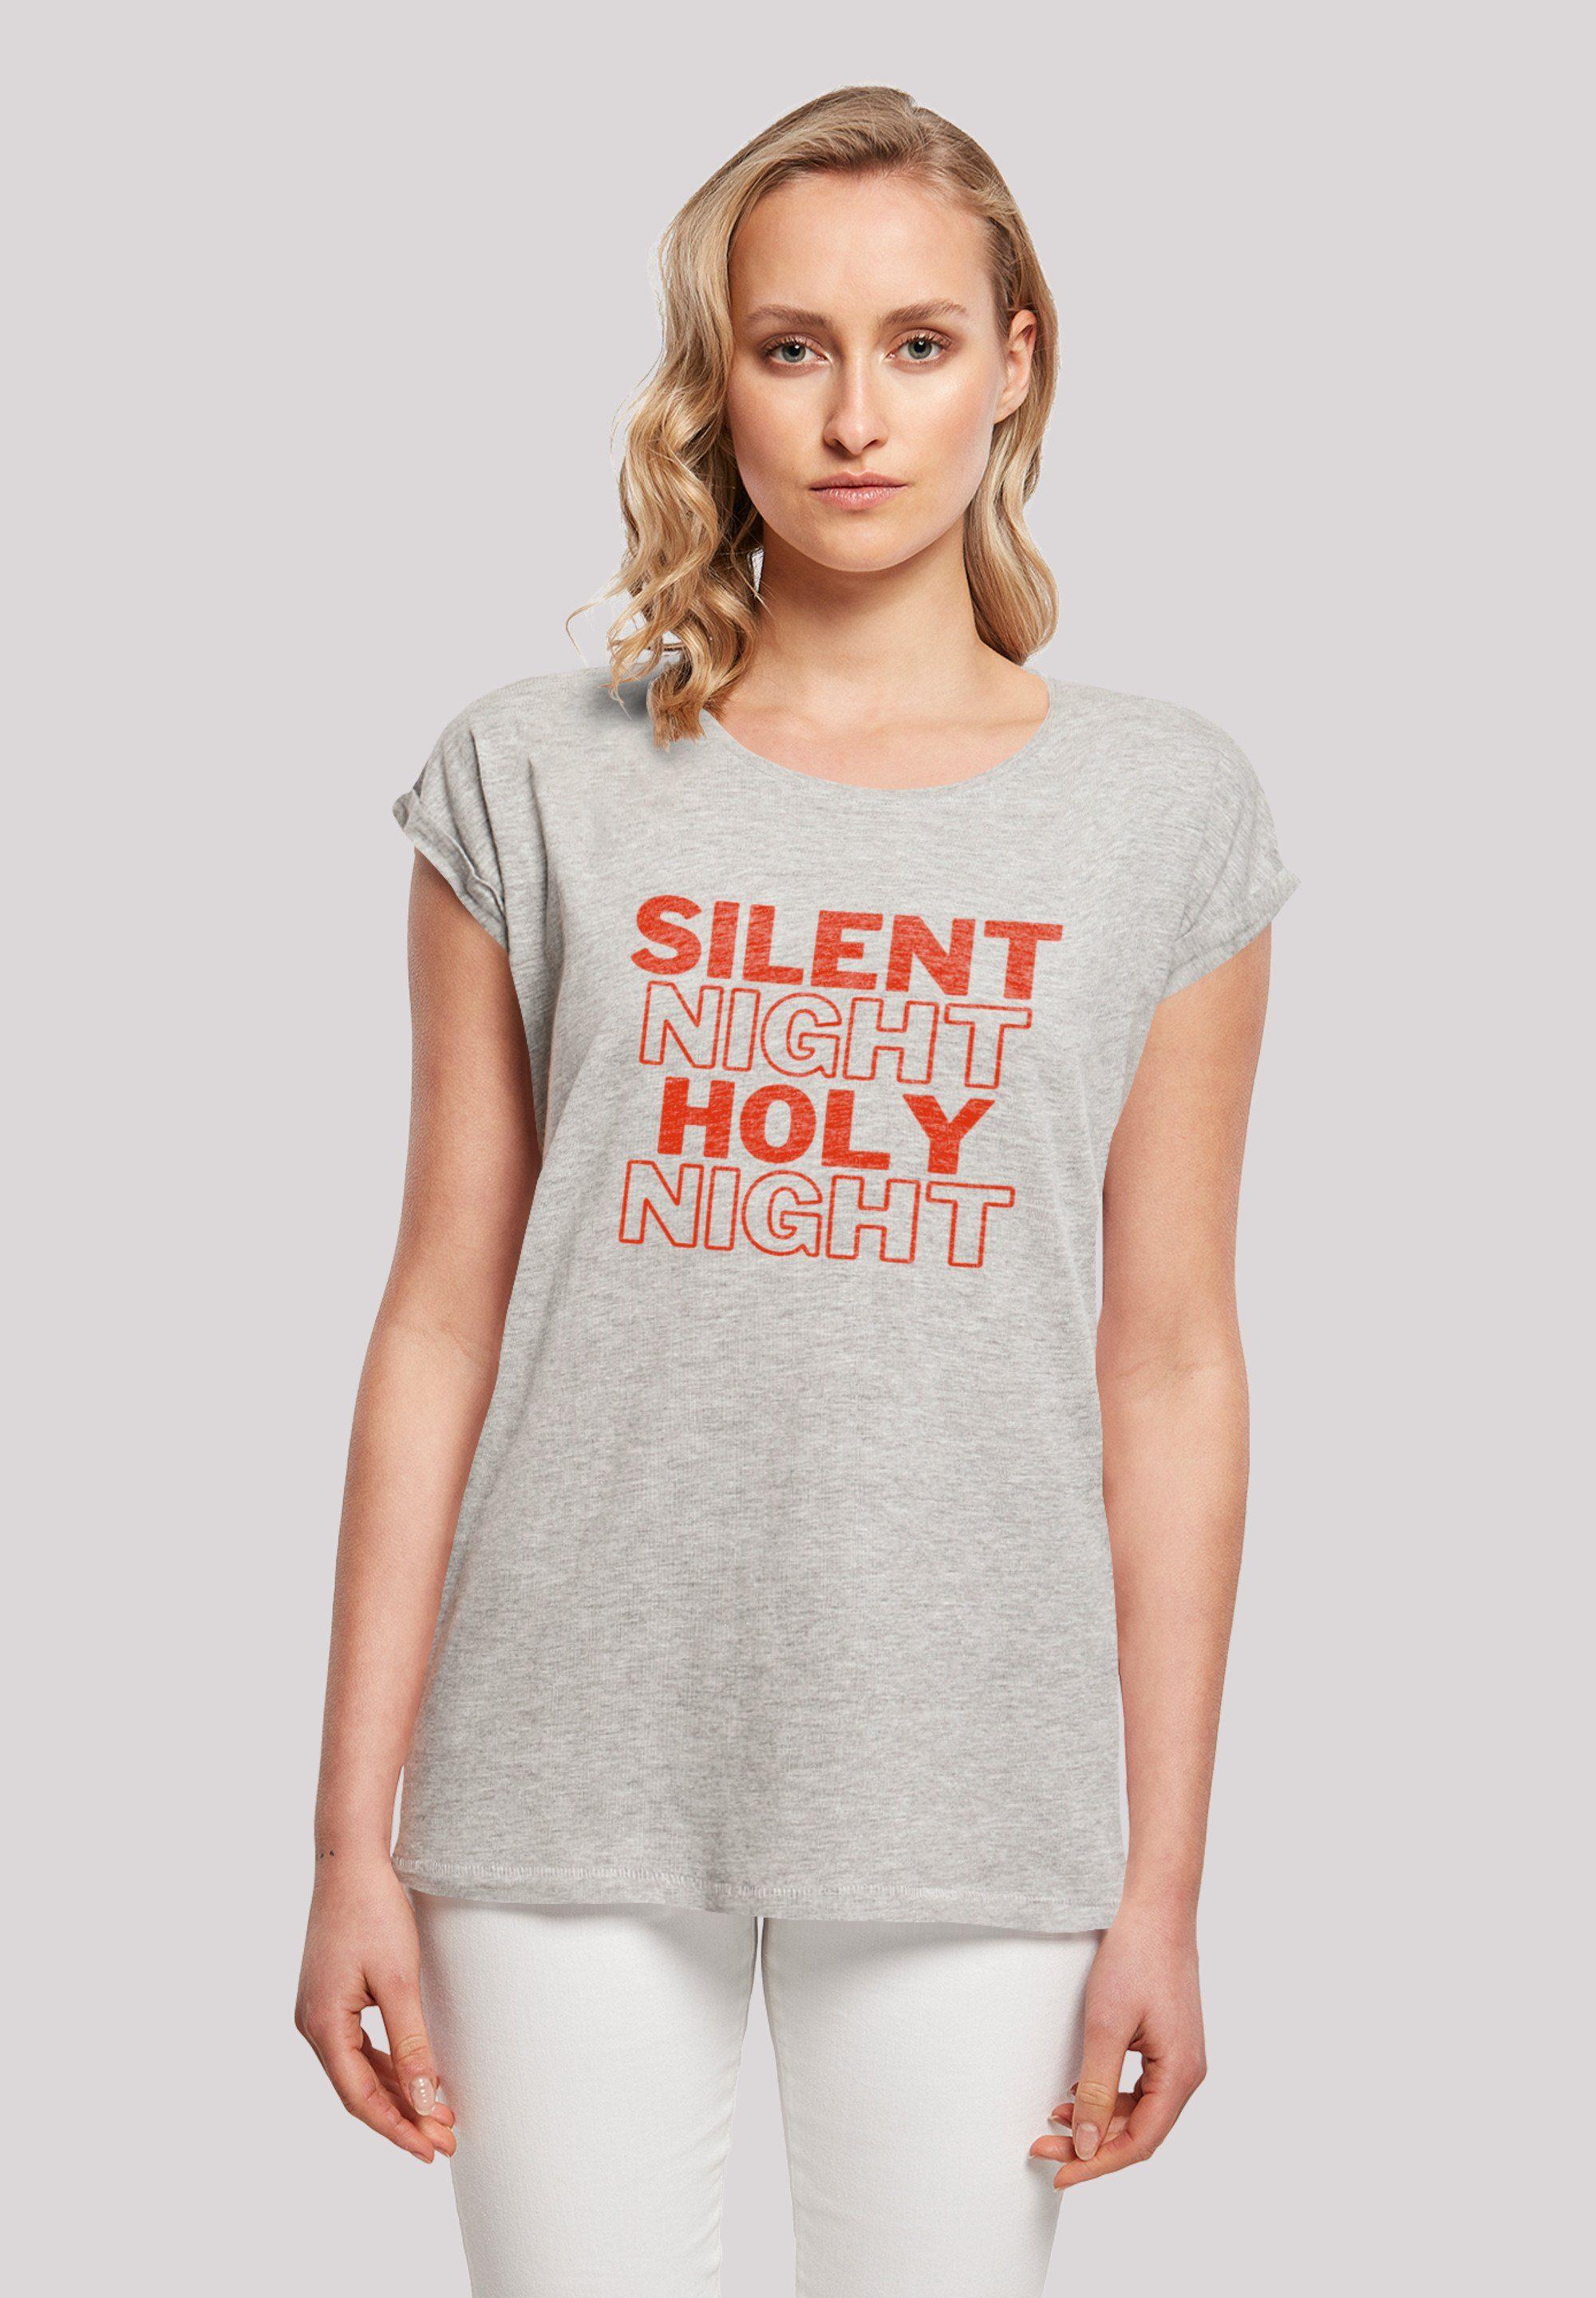 Lyst Silent T-Shirt F4NT4STIC Grau DE Print Weihnachten | Holy in Night